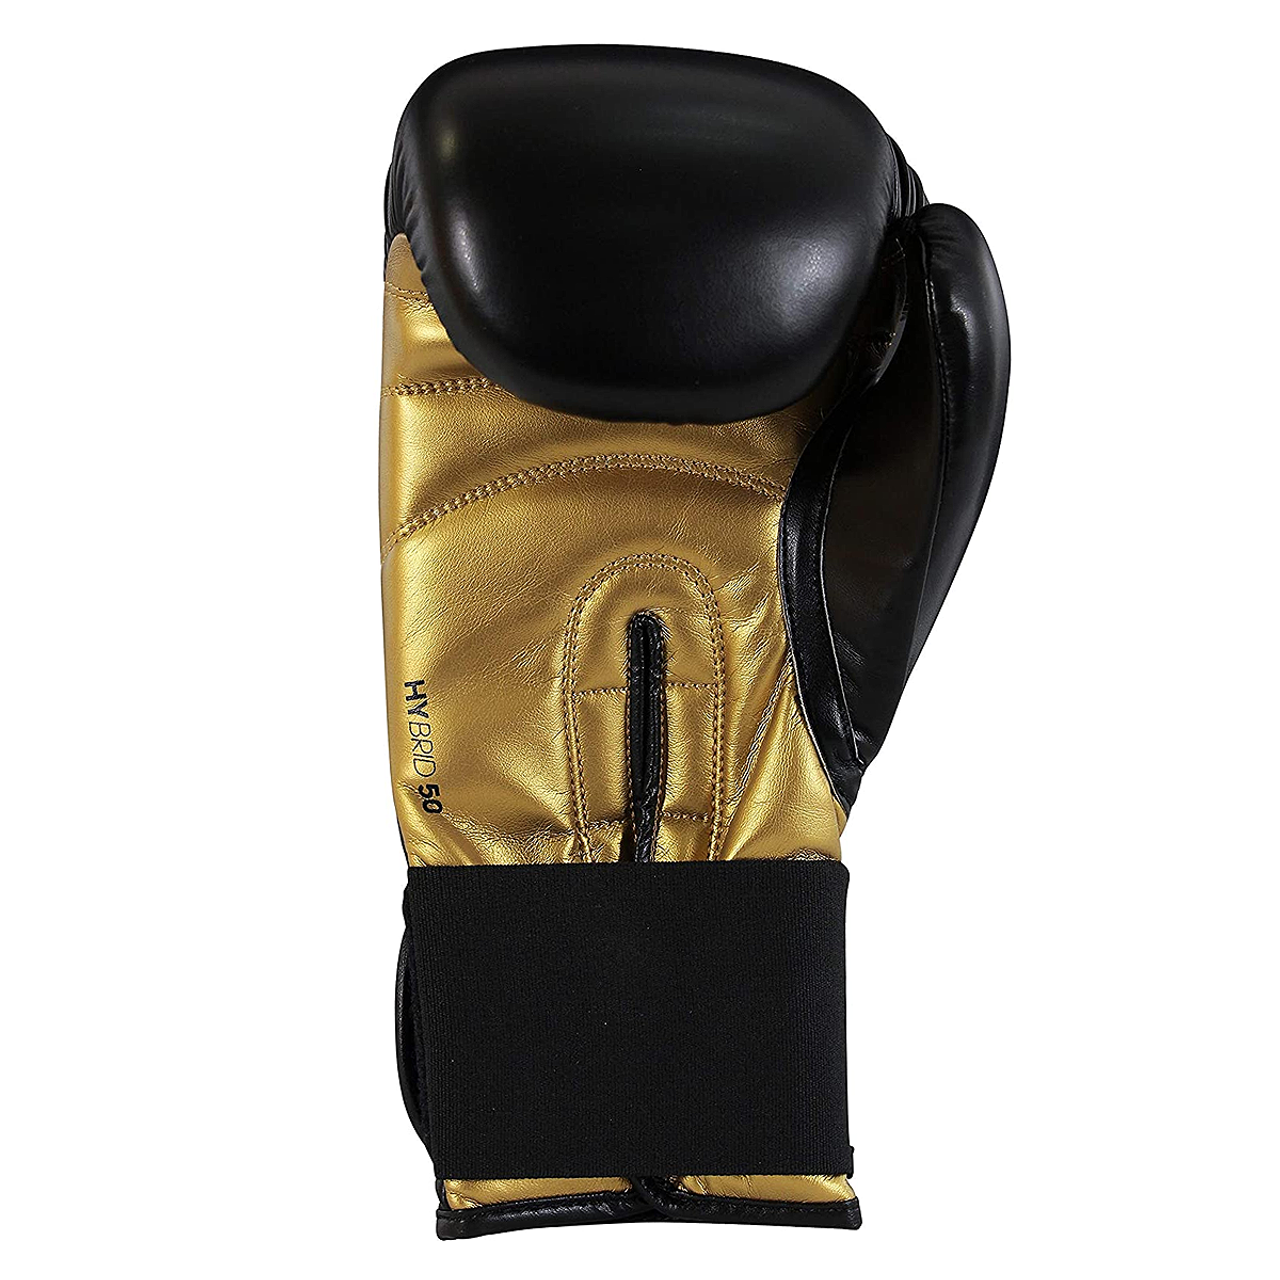 50 Black, Hybrid Boxing Gloves - Gold Adidas